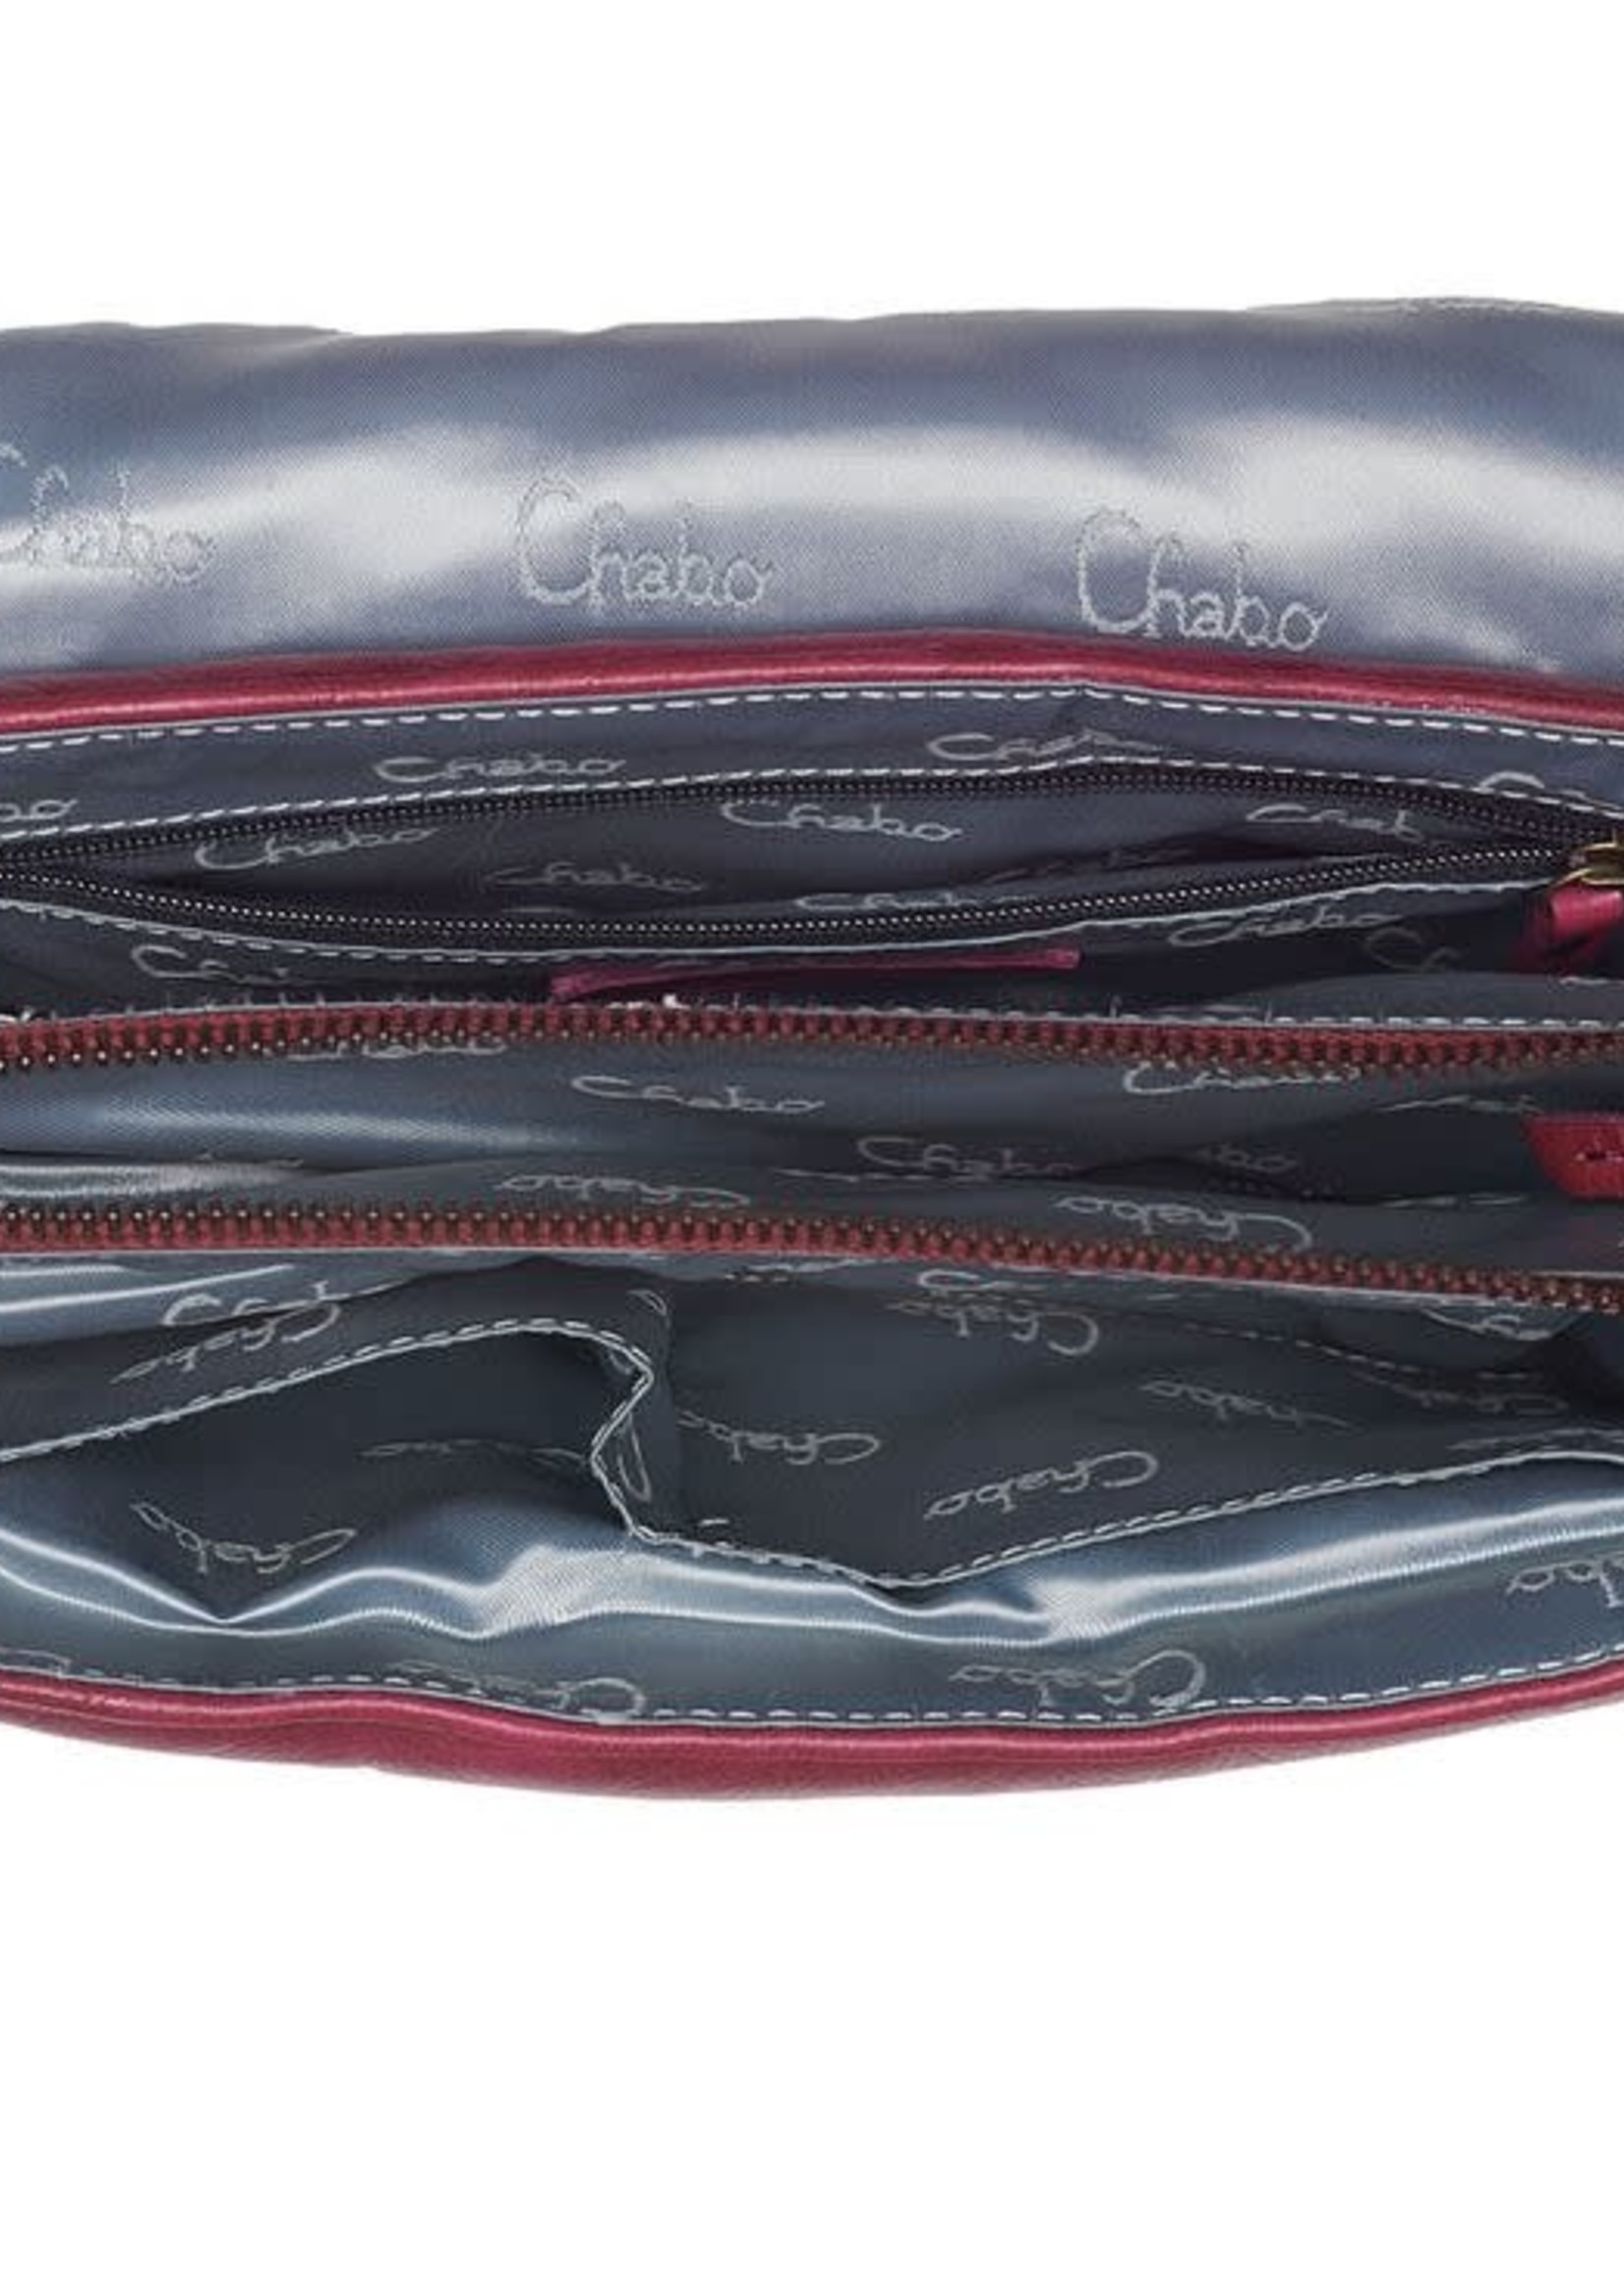 Chabo Chabo - Venice Handbag